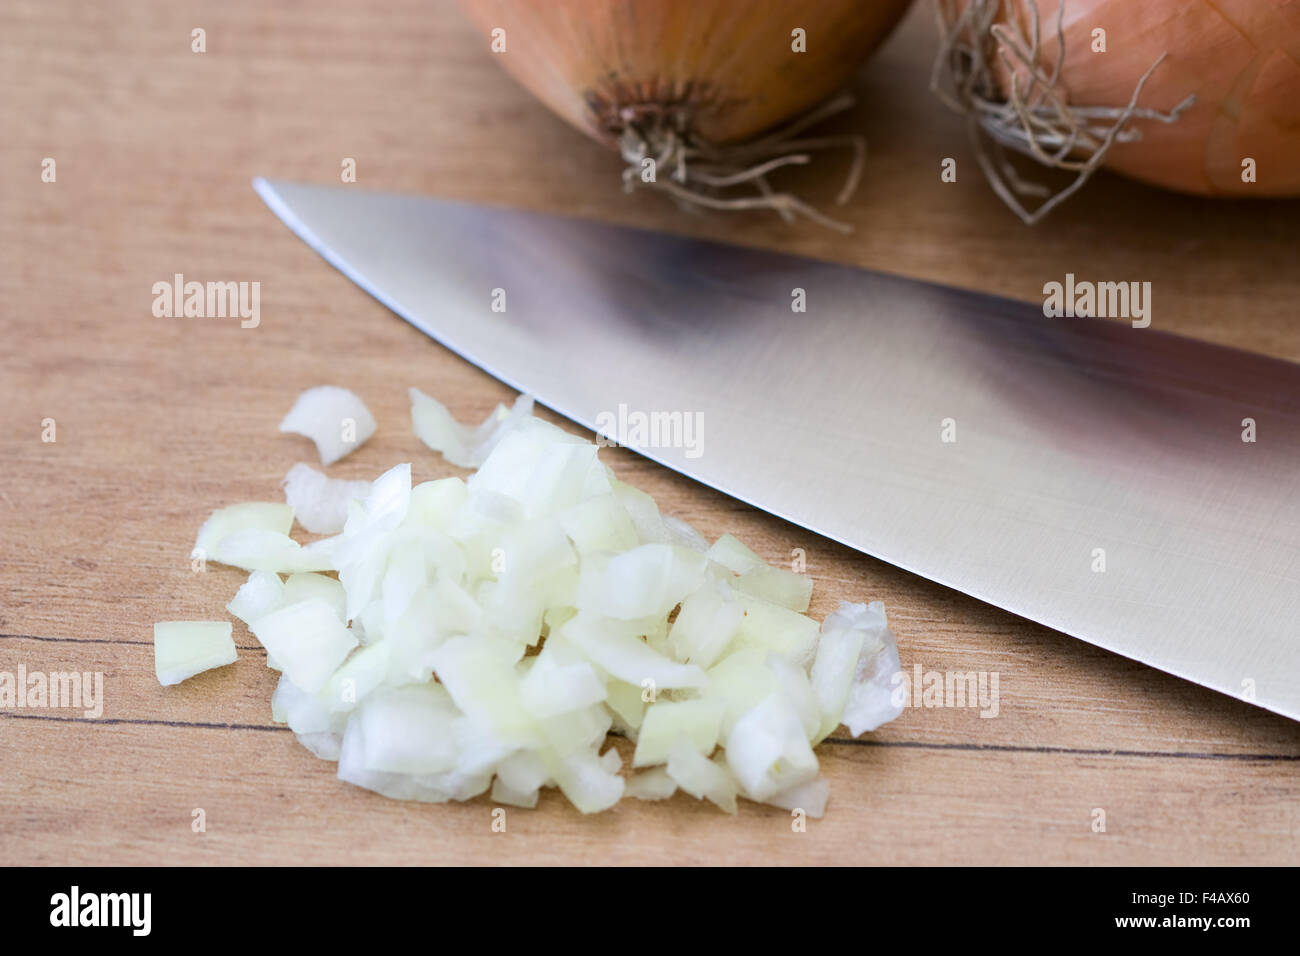 Gehackte Zwiebel - Chopped Onion Stock Photo